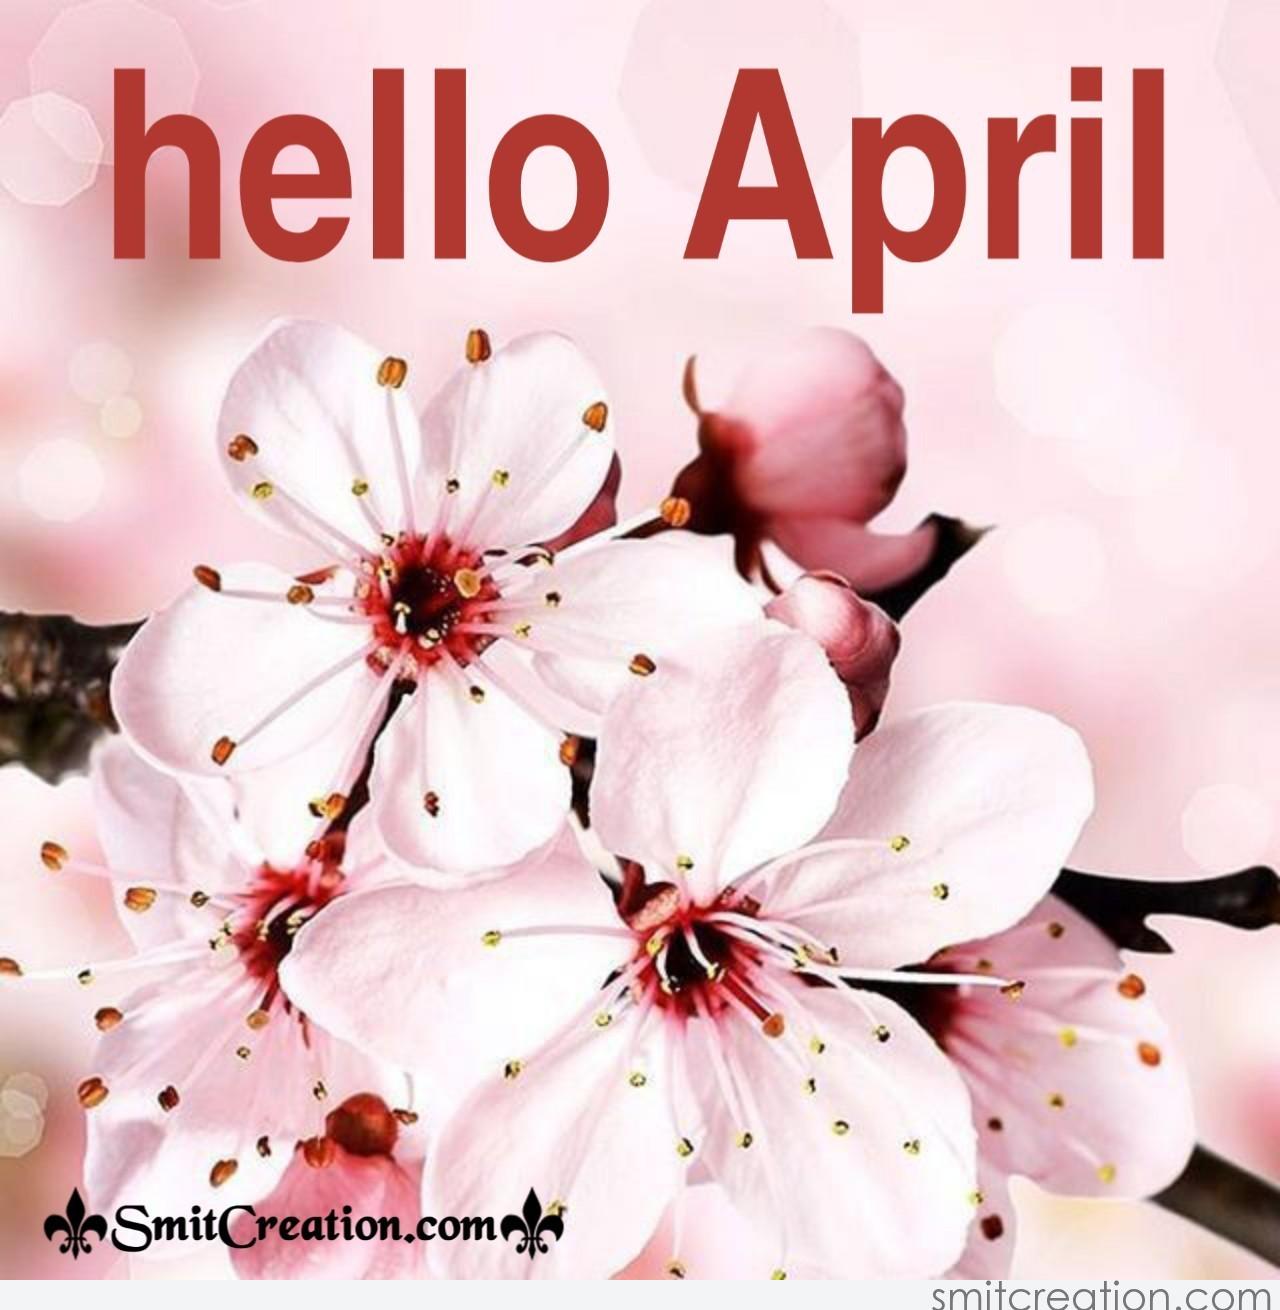 Hello April - SmitCreation.com